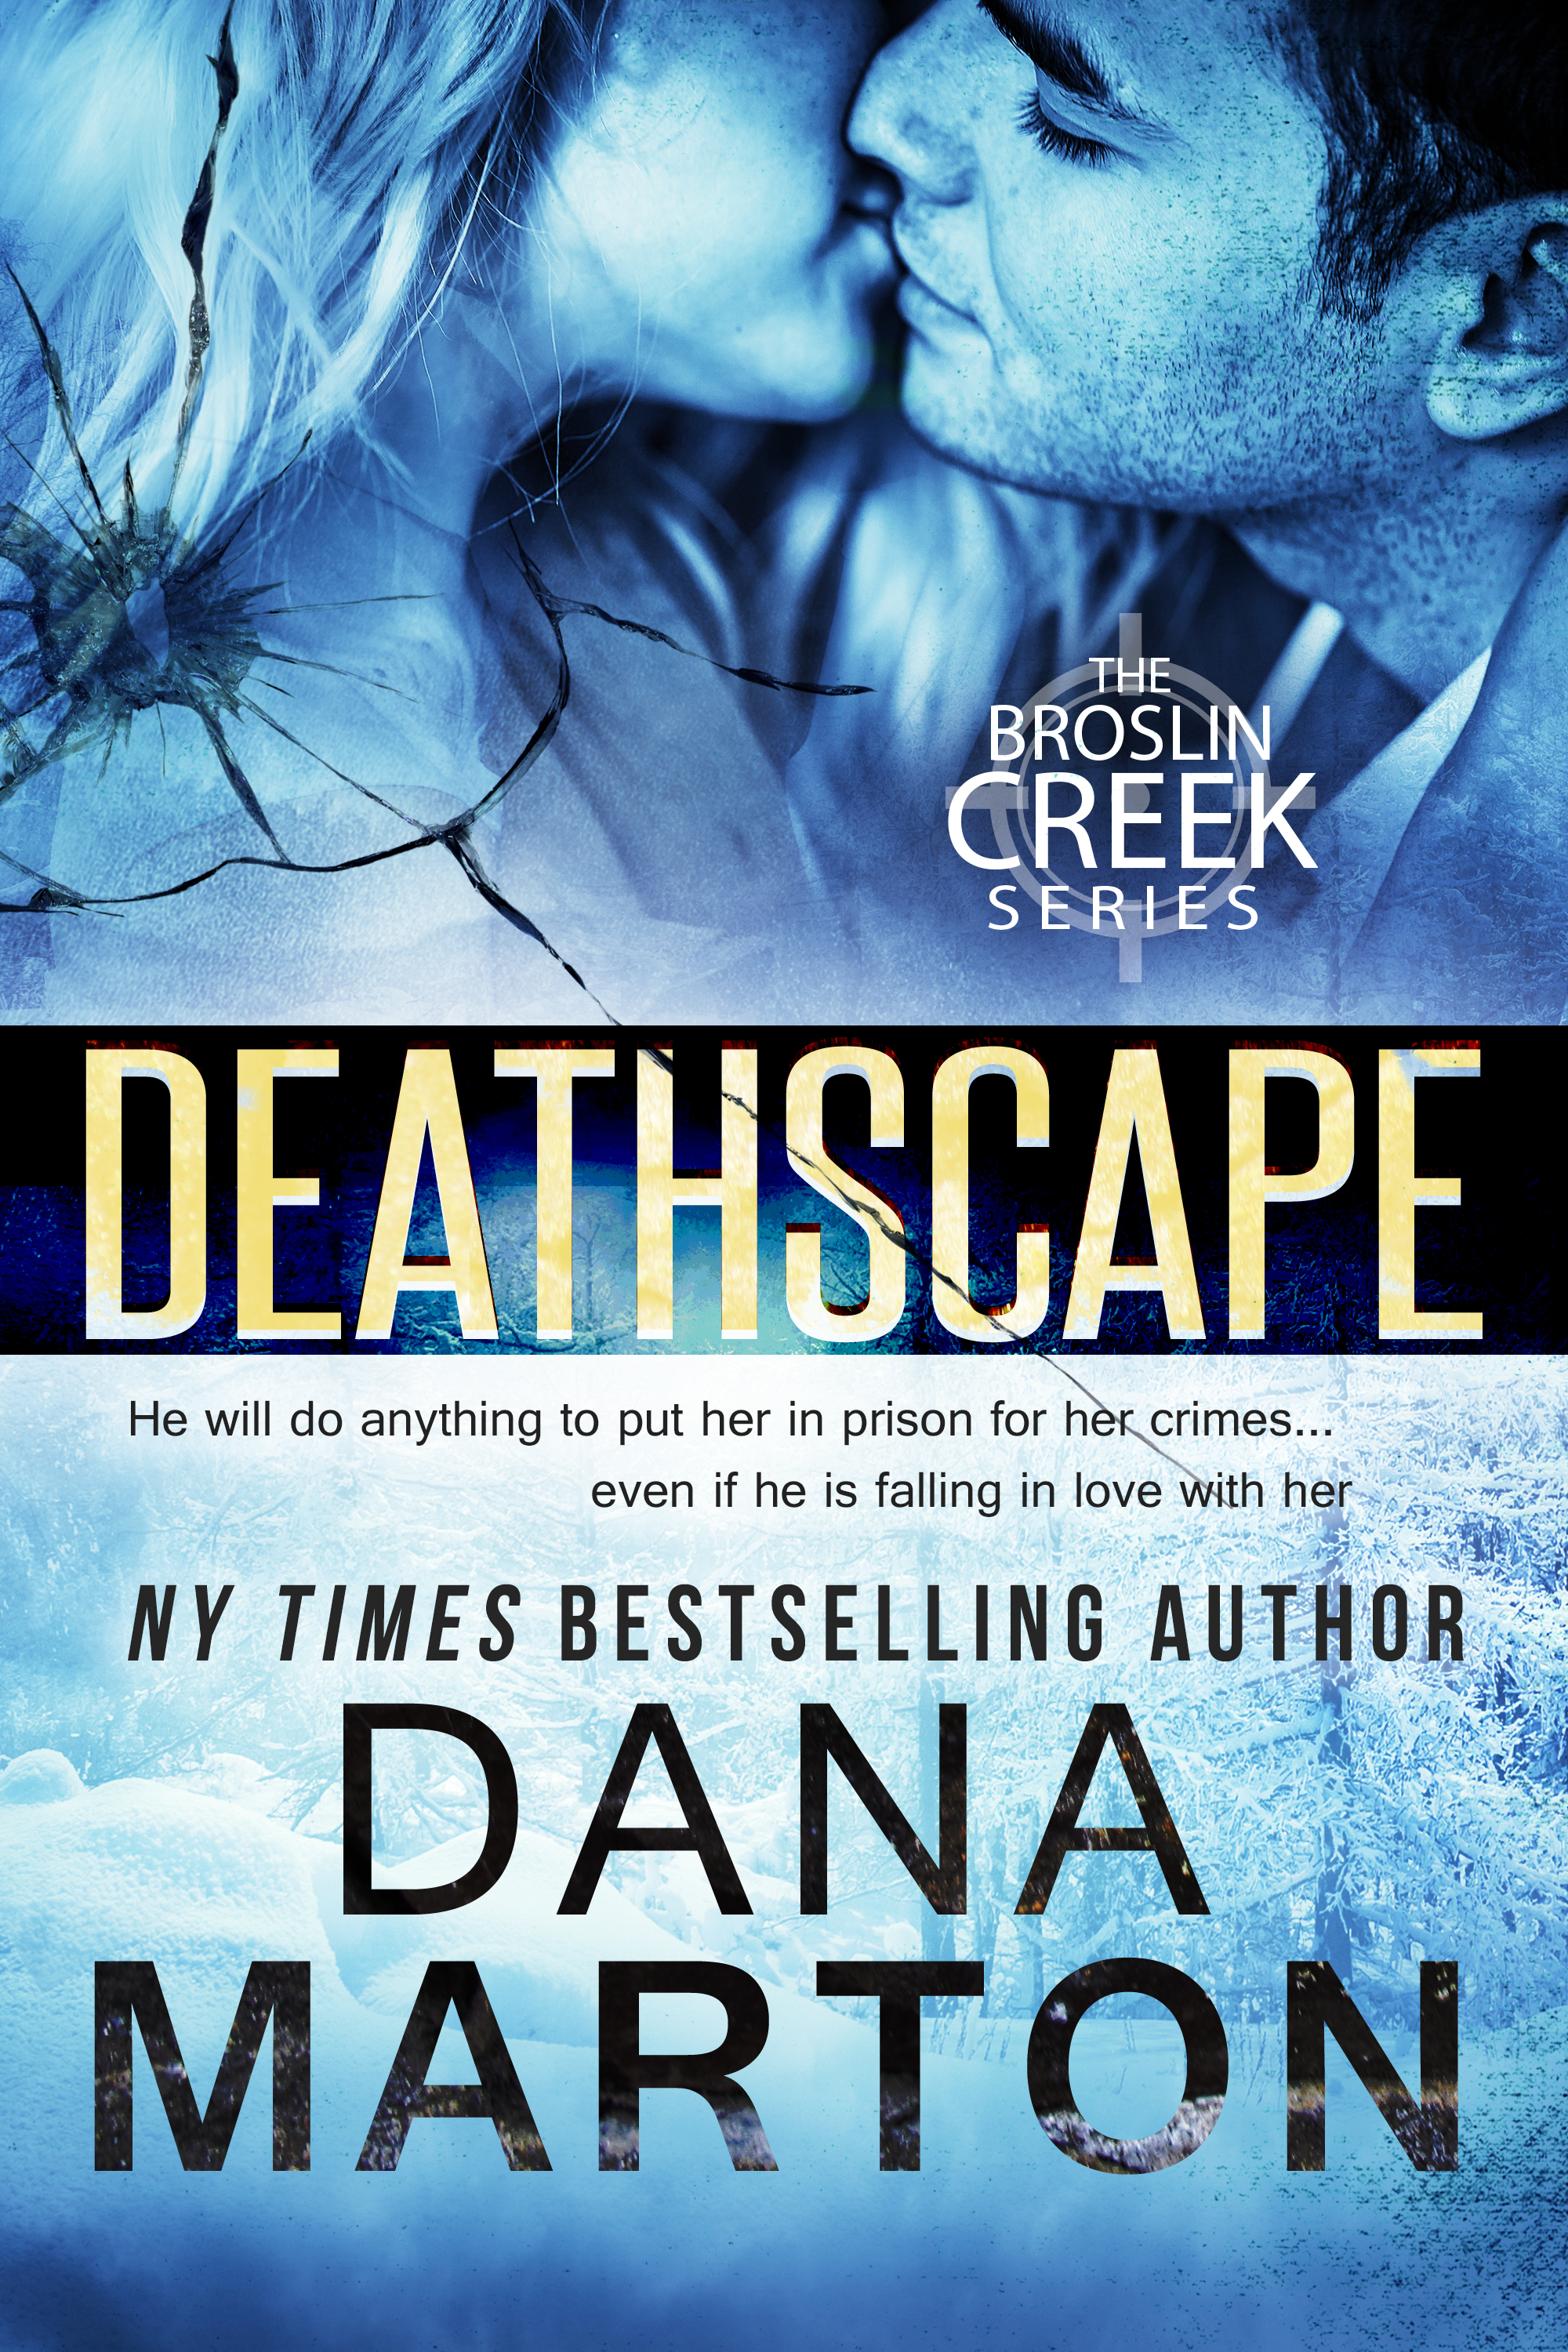 Deathscape by Dana Marton